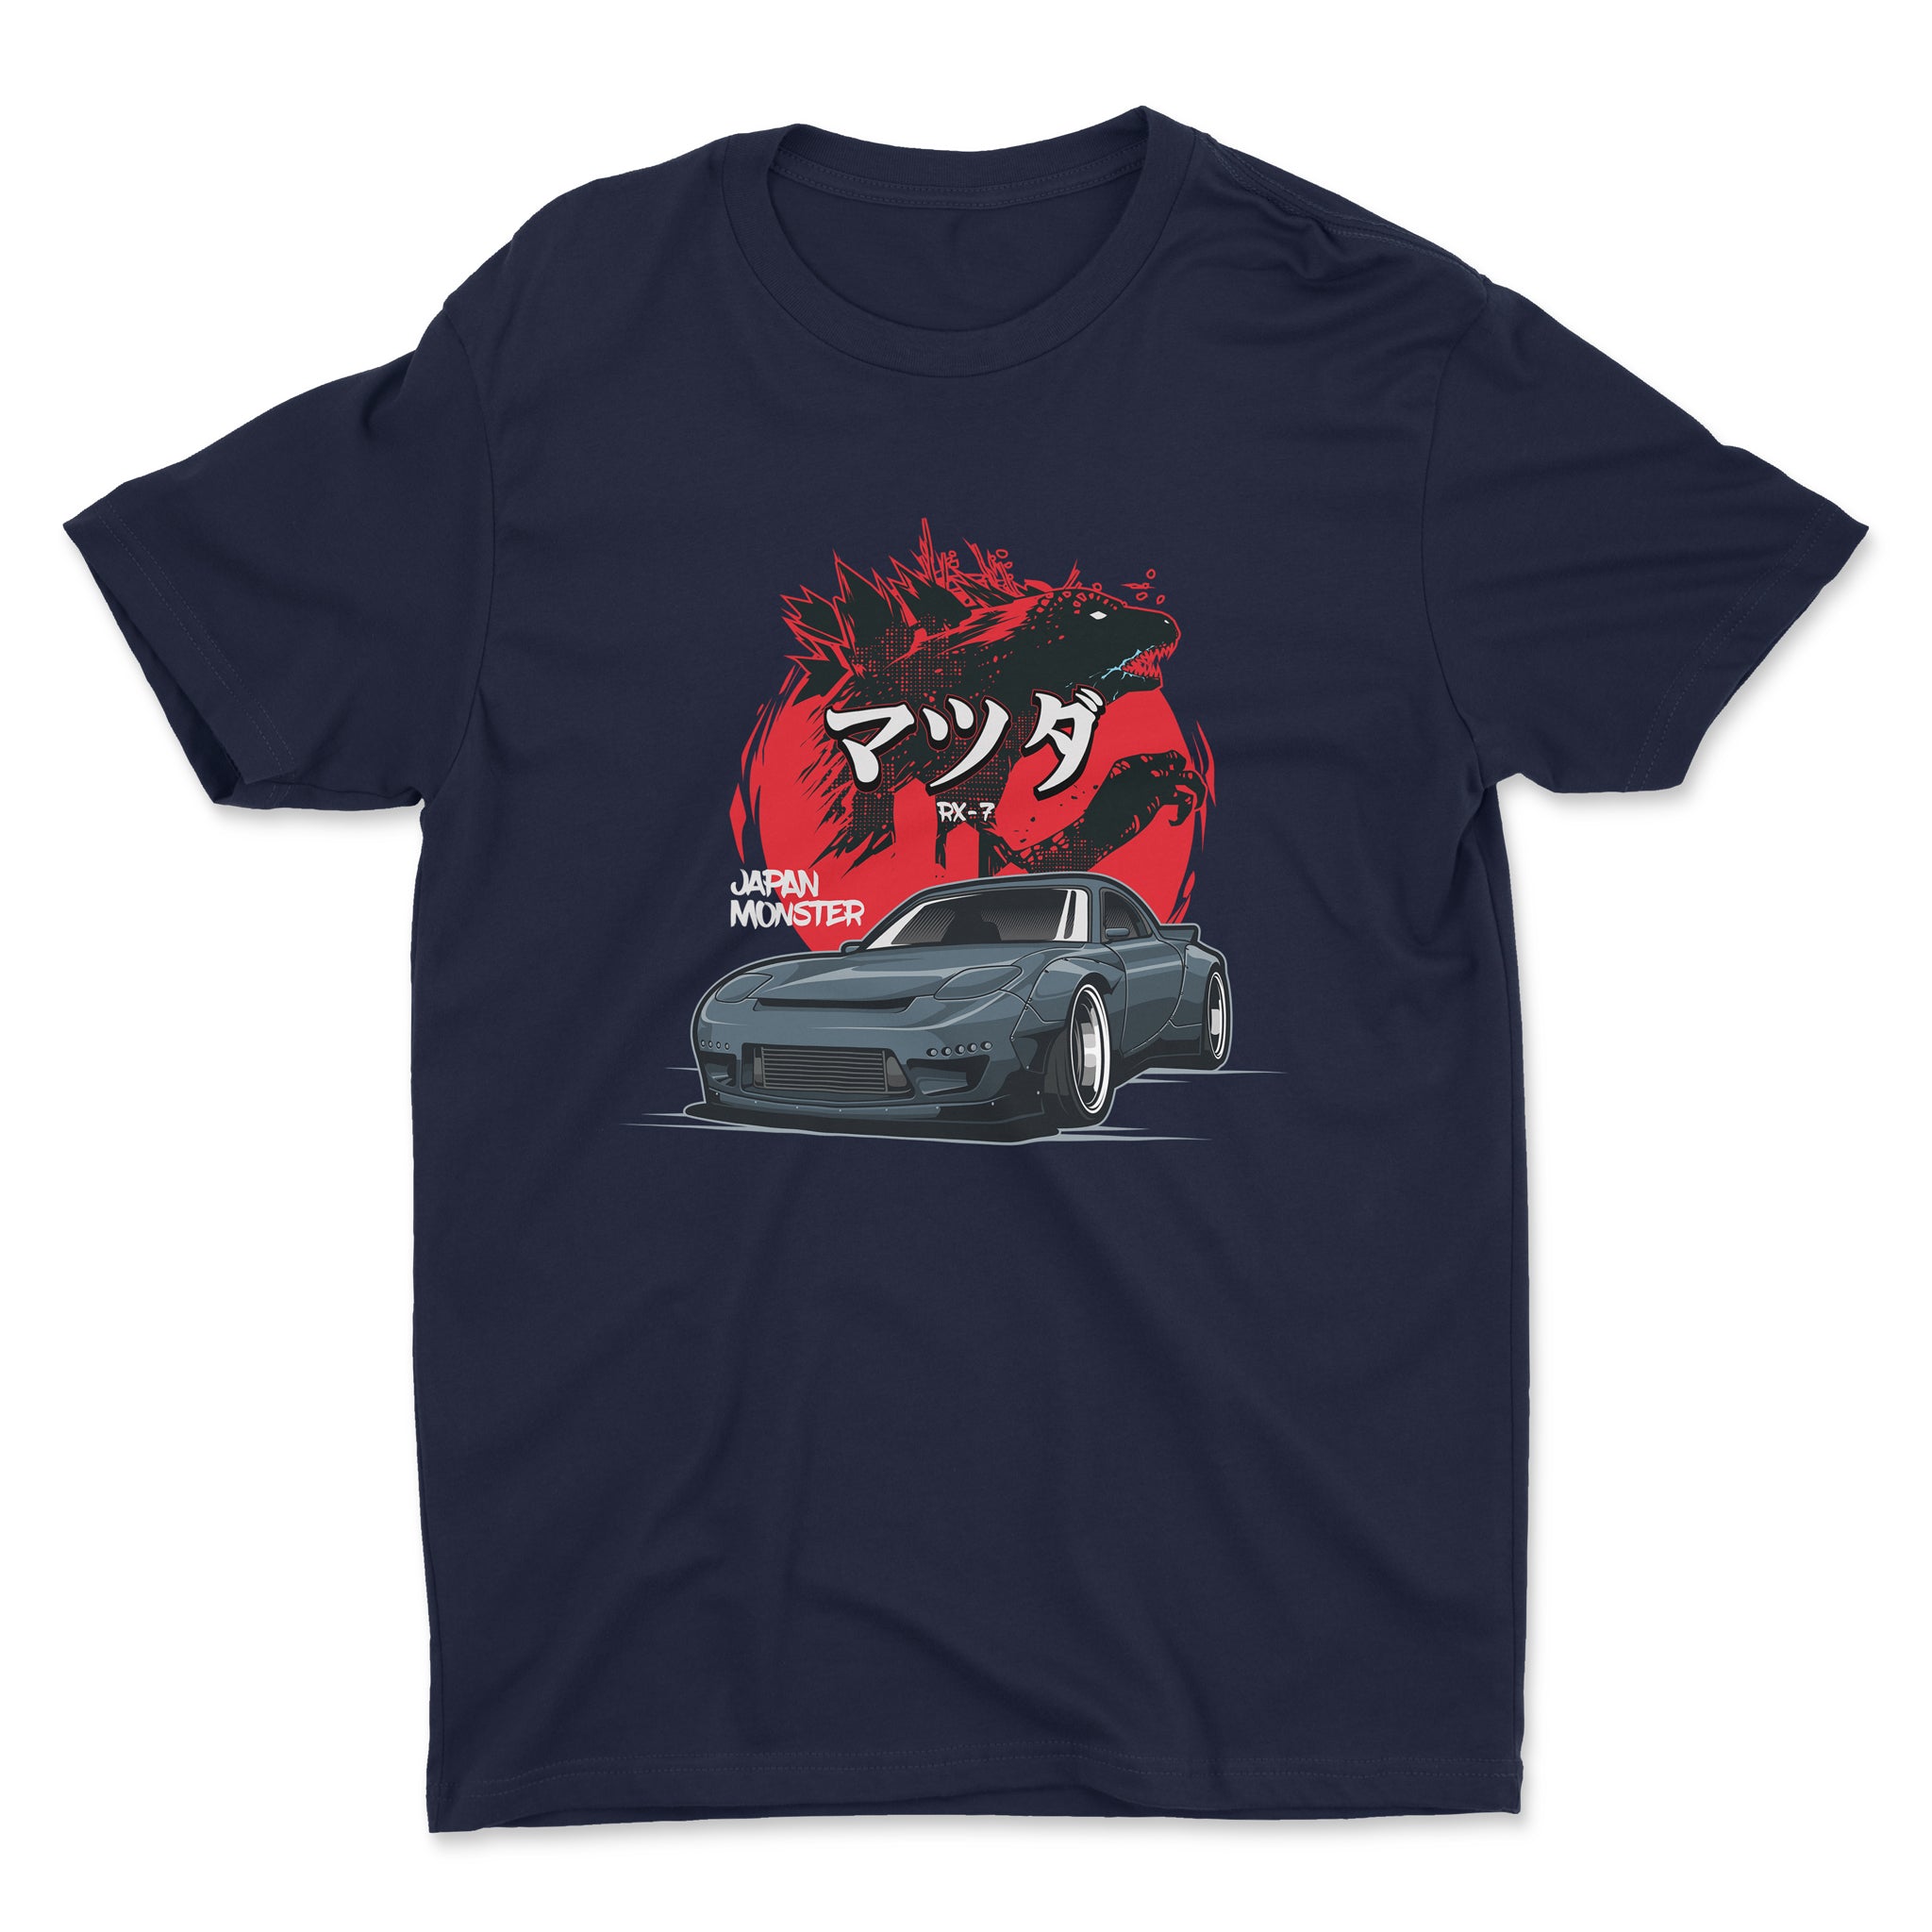 Mazda RX-7 Japan Monster - Car T-Shirt - Navy